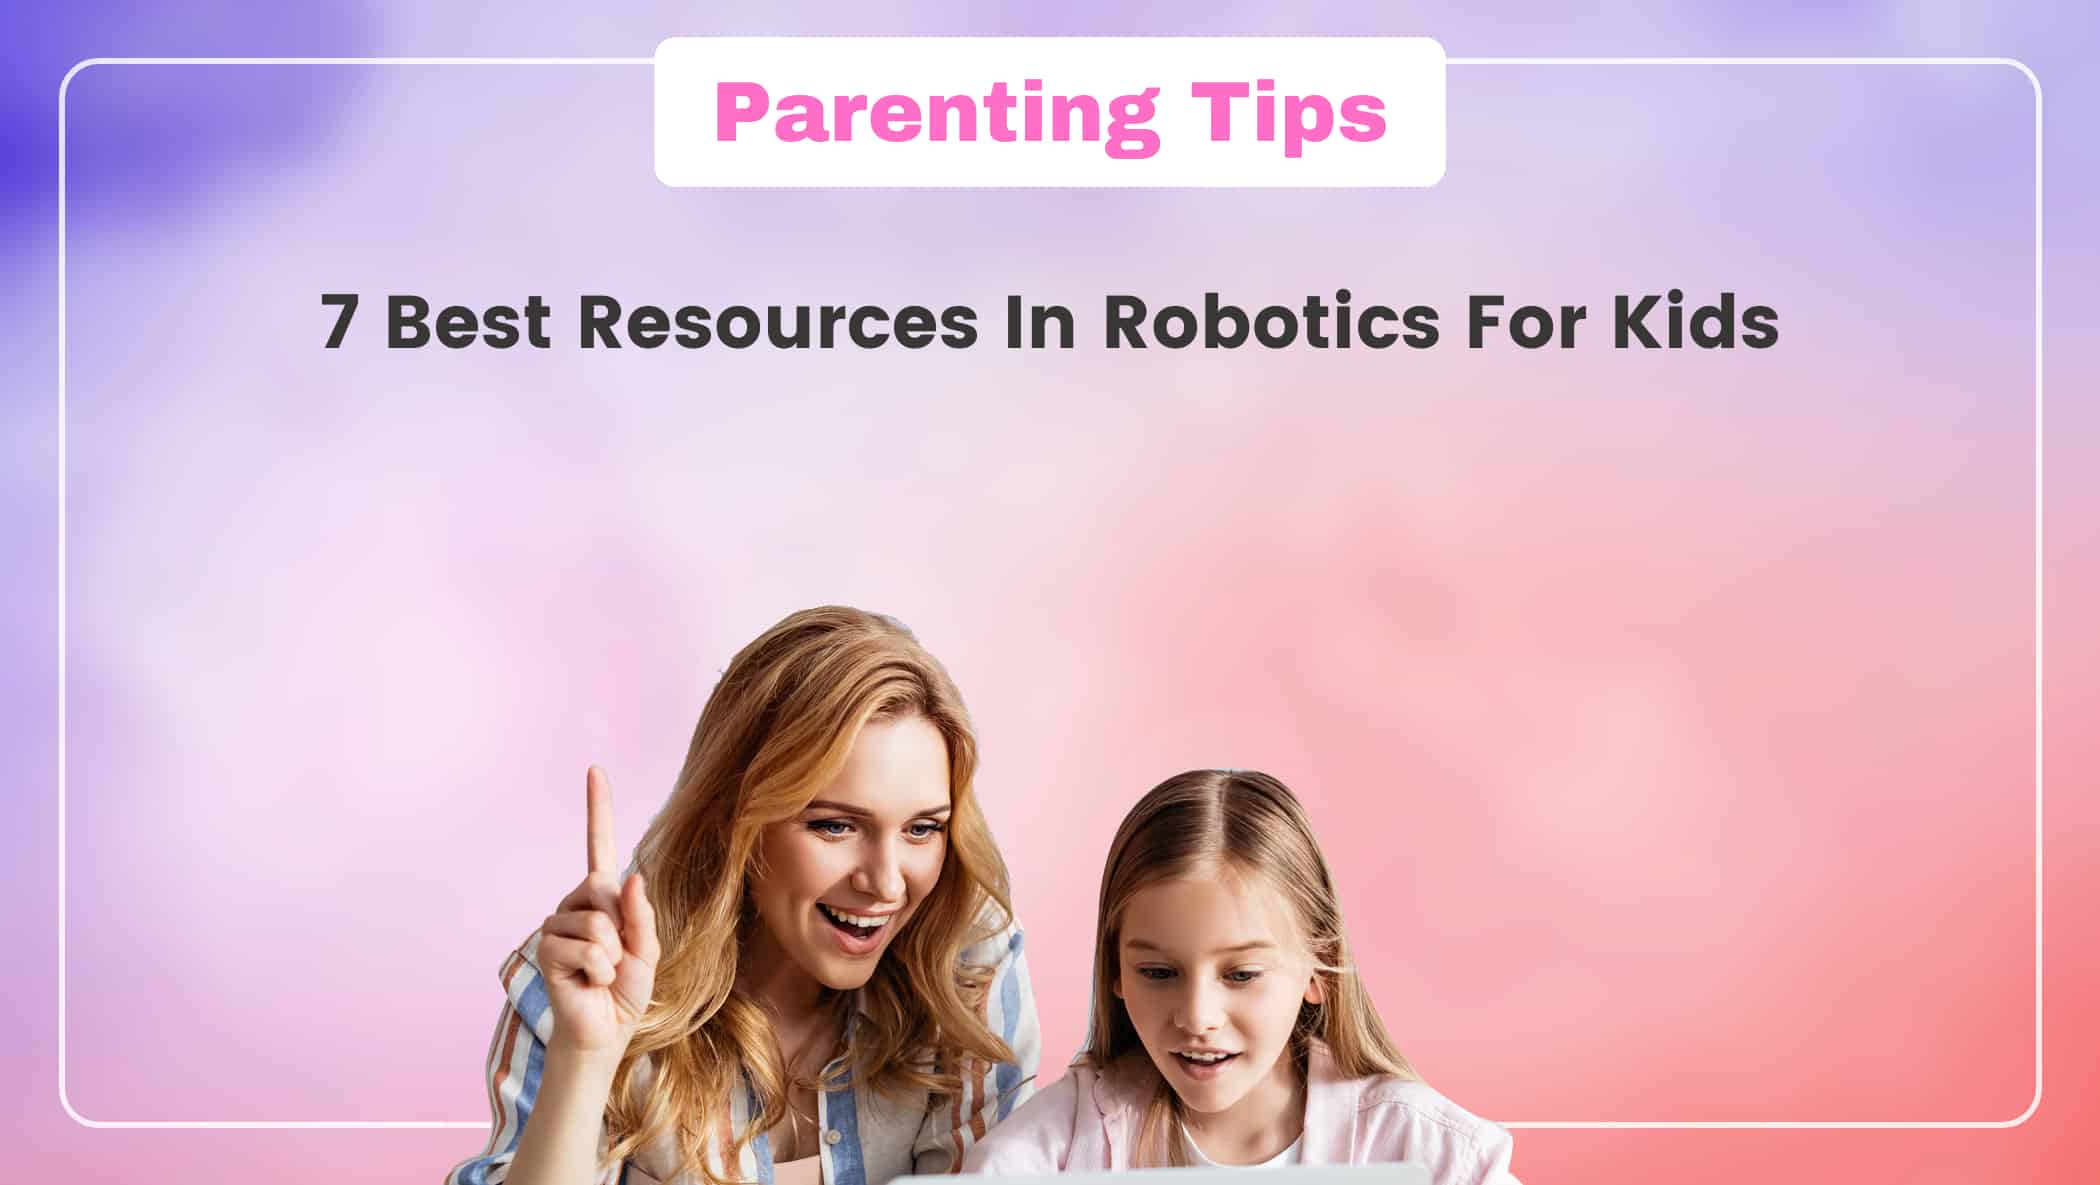 https://brightchamps.com/blog/wp-content/uploads/2022/05/7-Best-Resources-In-Robotics-For-Kids-Image.jpg